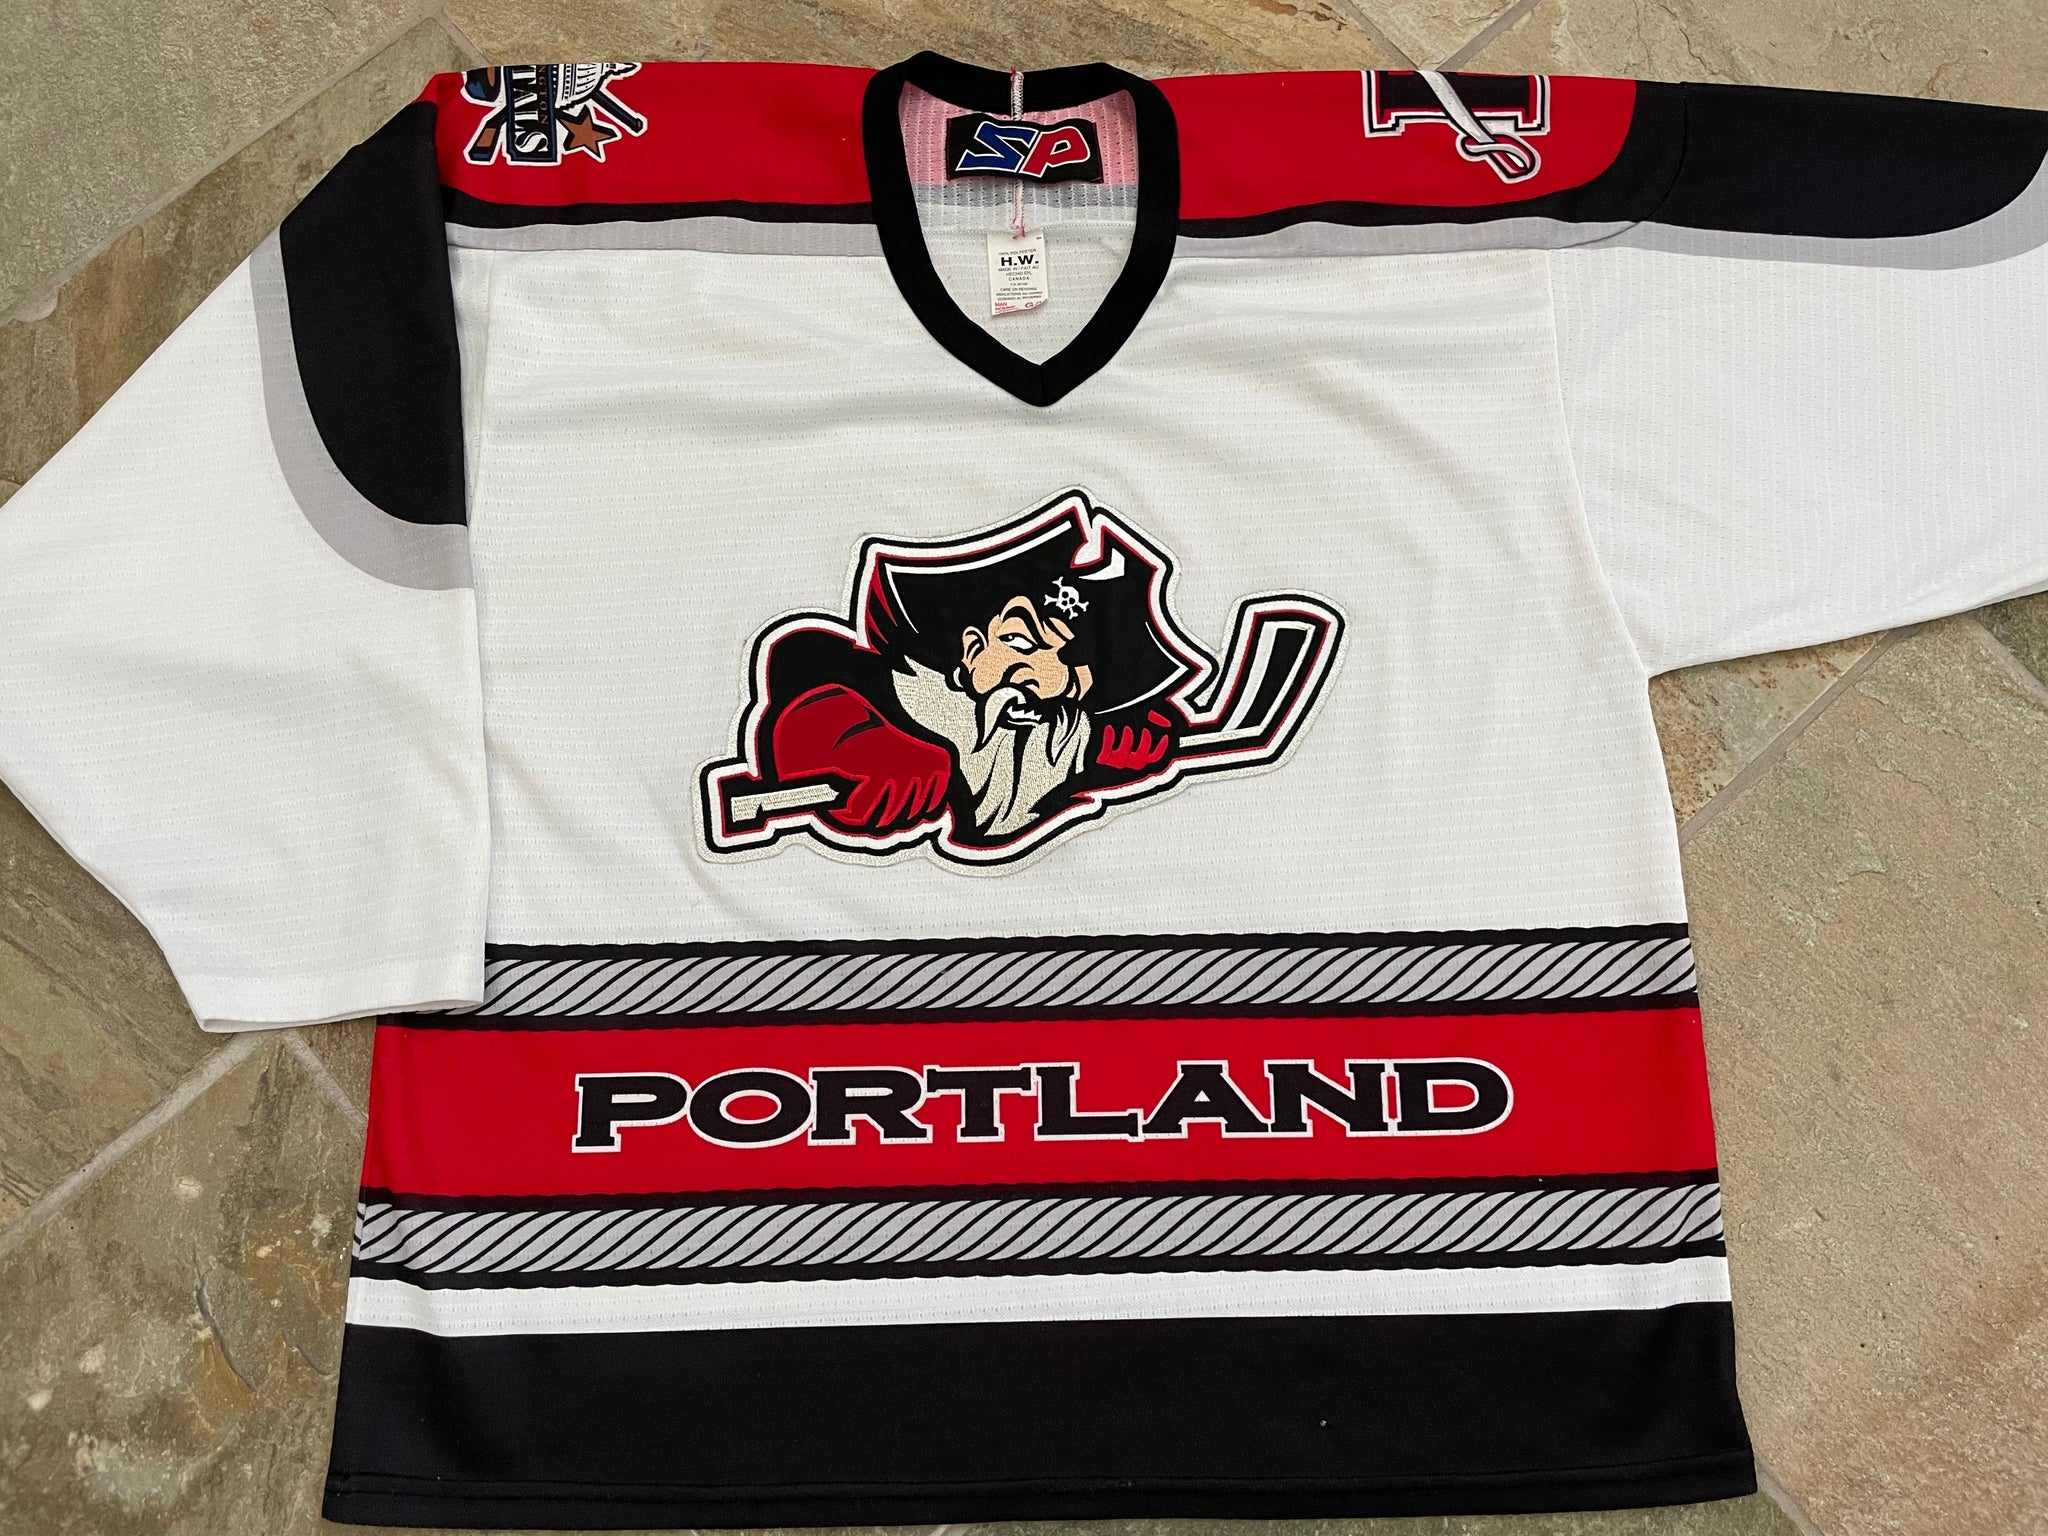 Graydon Portland Pirates #20 AHL CCM Official Replica Hockey Jersey XL